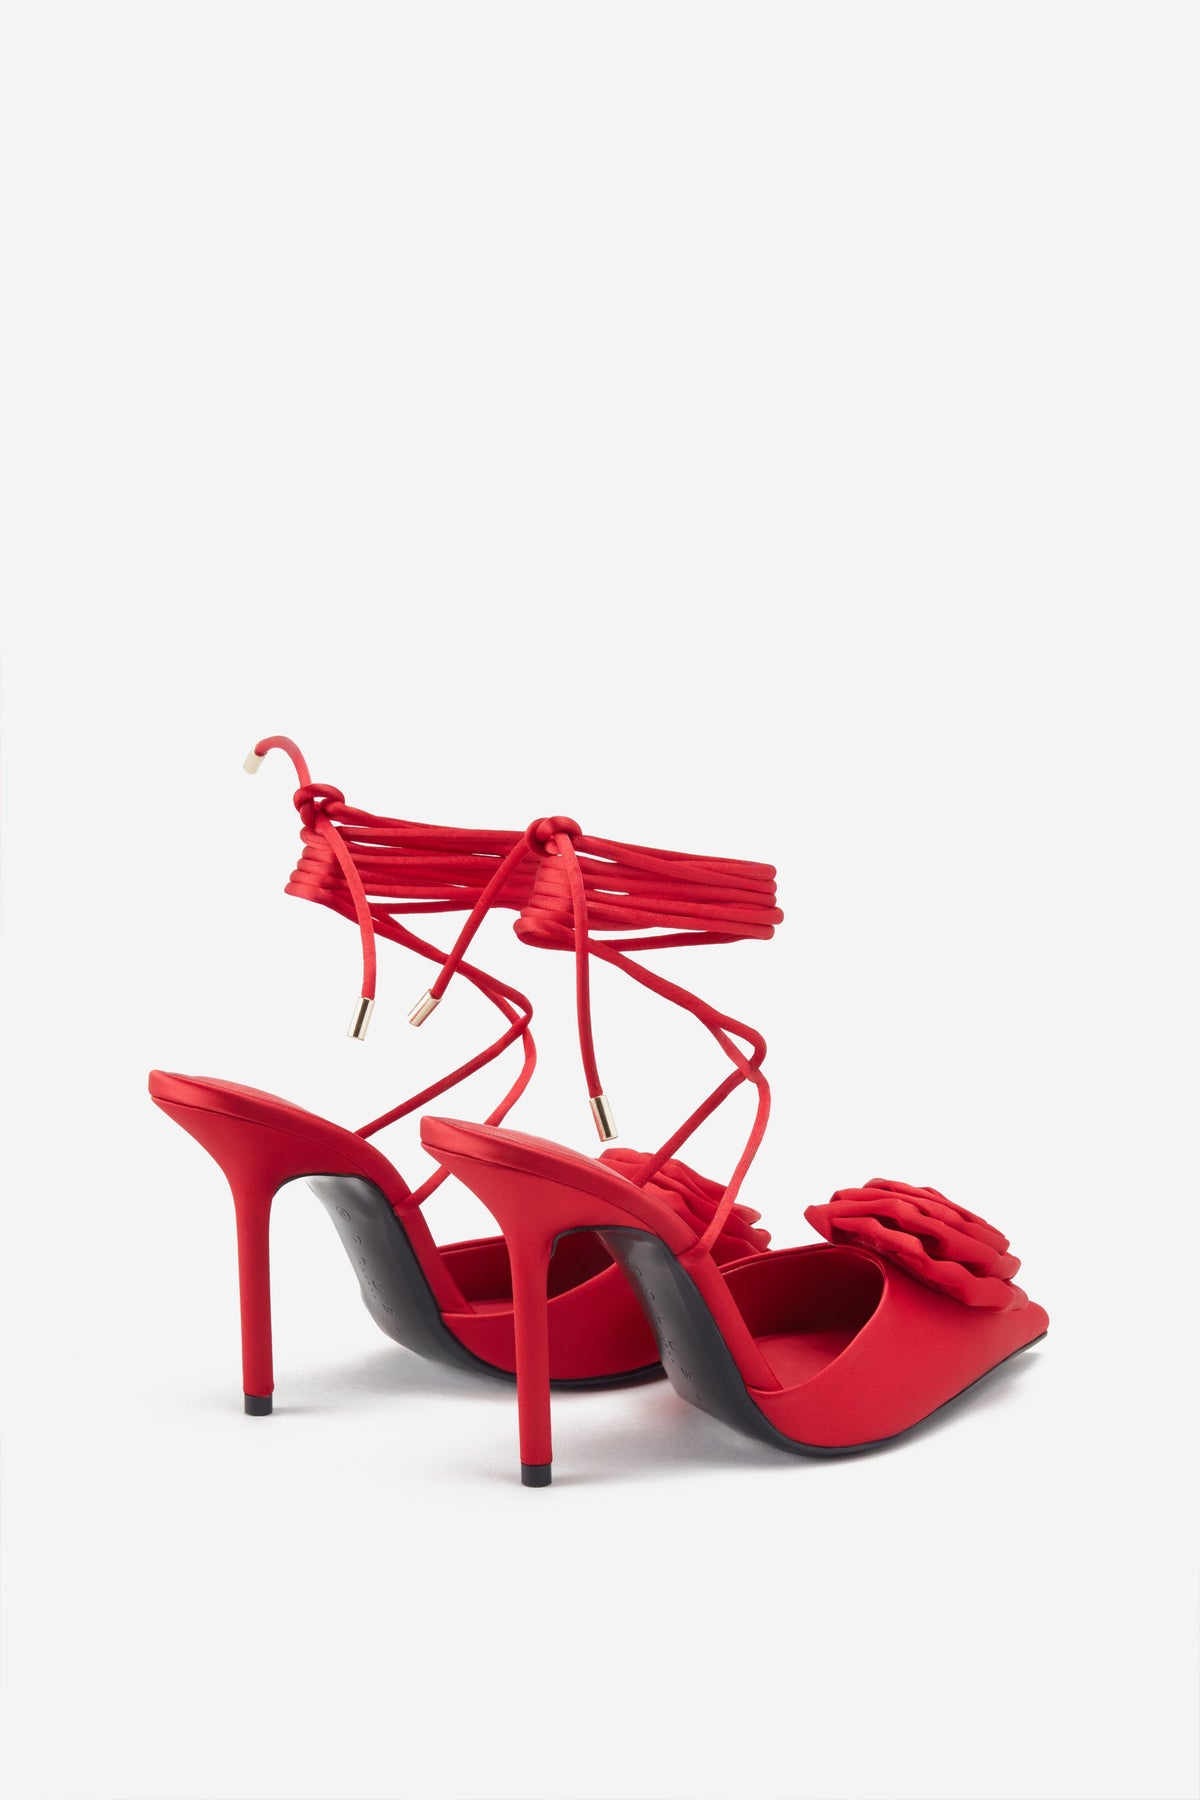 Sexy red high heel sandals ankle straps - Super X Studio